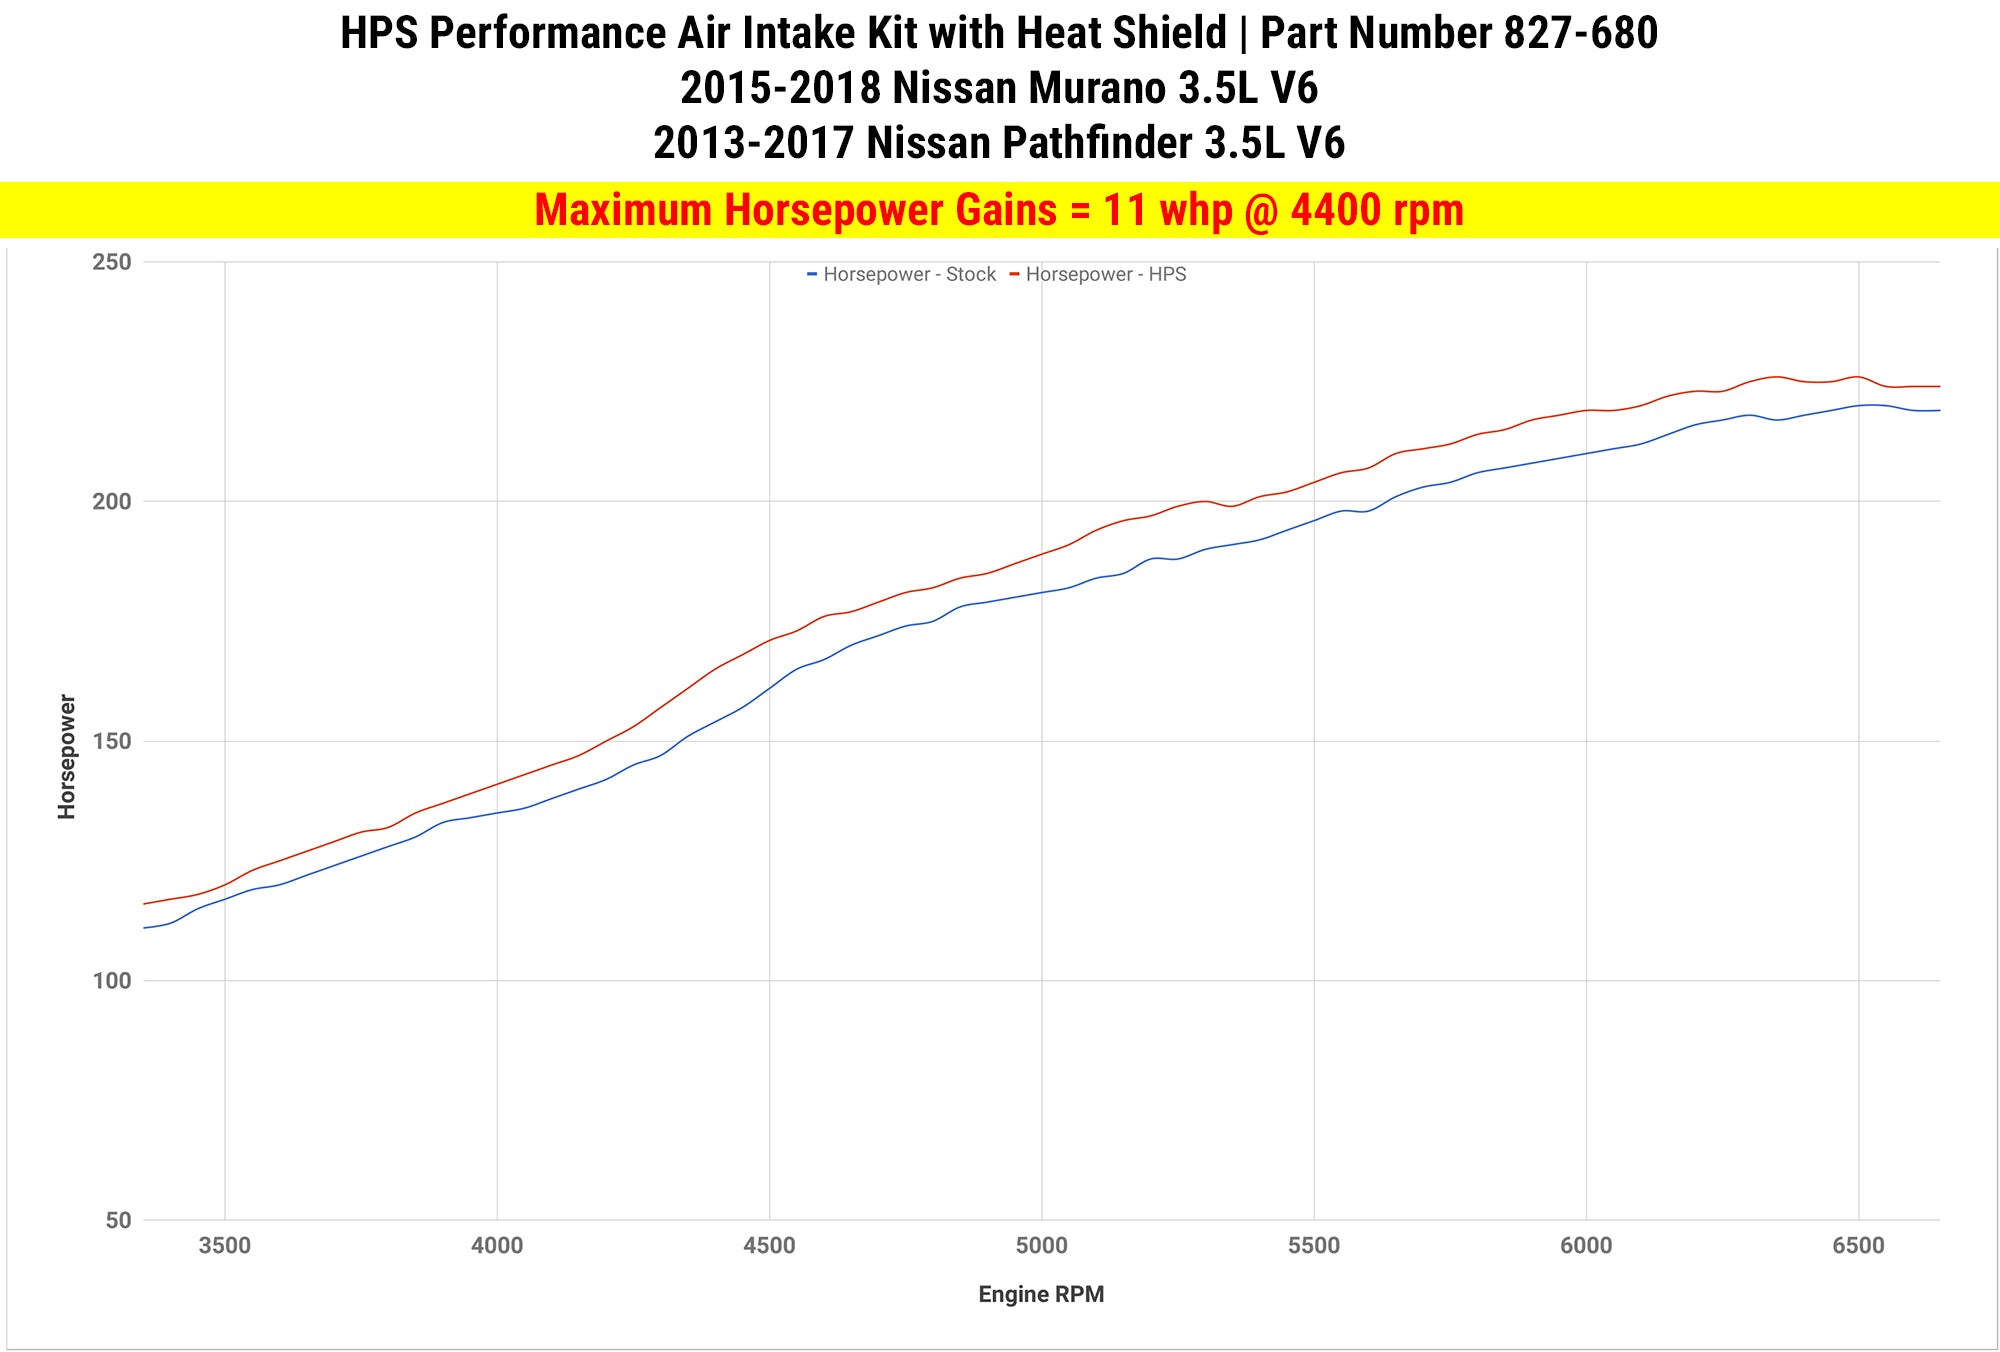 Dyno proven increase horsepower 11 whp HPS Shortram Cold Air Intake Kit 2013-2016 Nissan Pathfinder 3.5L V6 827-680